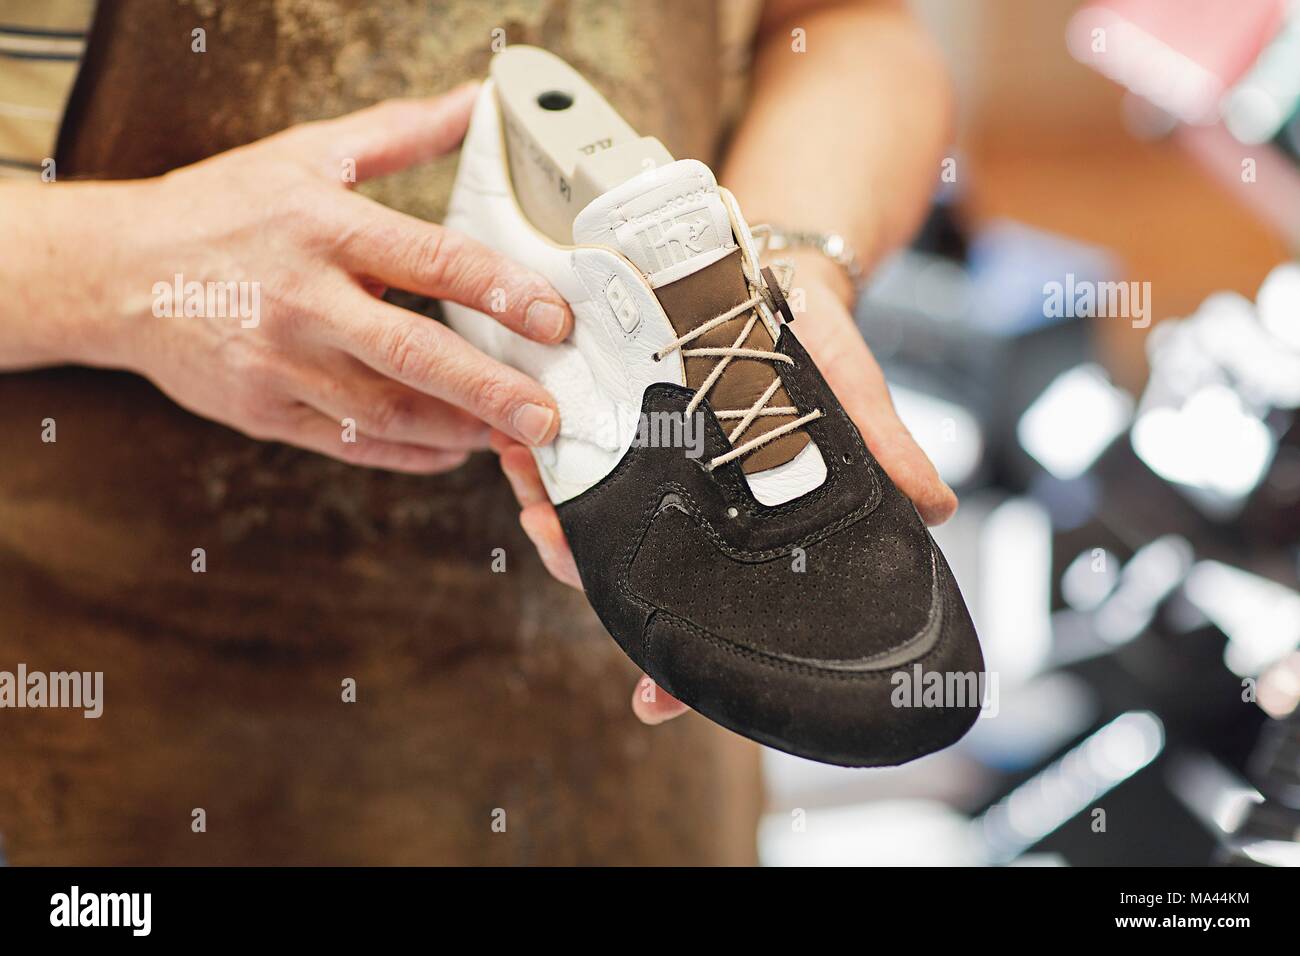 The making of Kangaroos at the & Hummel shoe factory in Rhineland-Palatinate, Germany Stock Photo Alamy